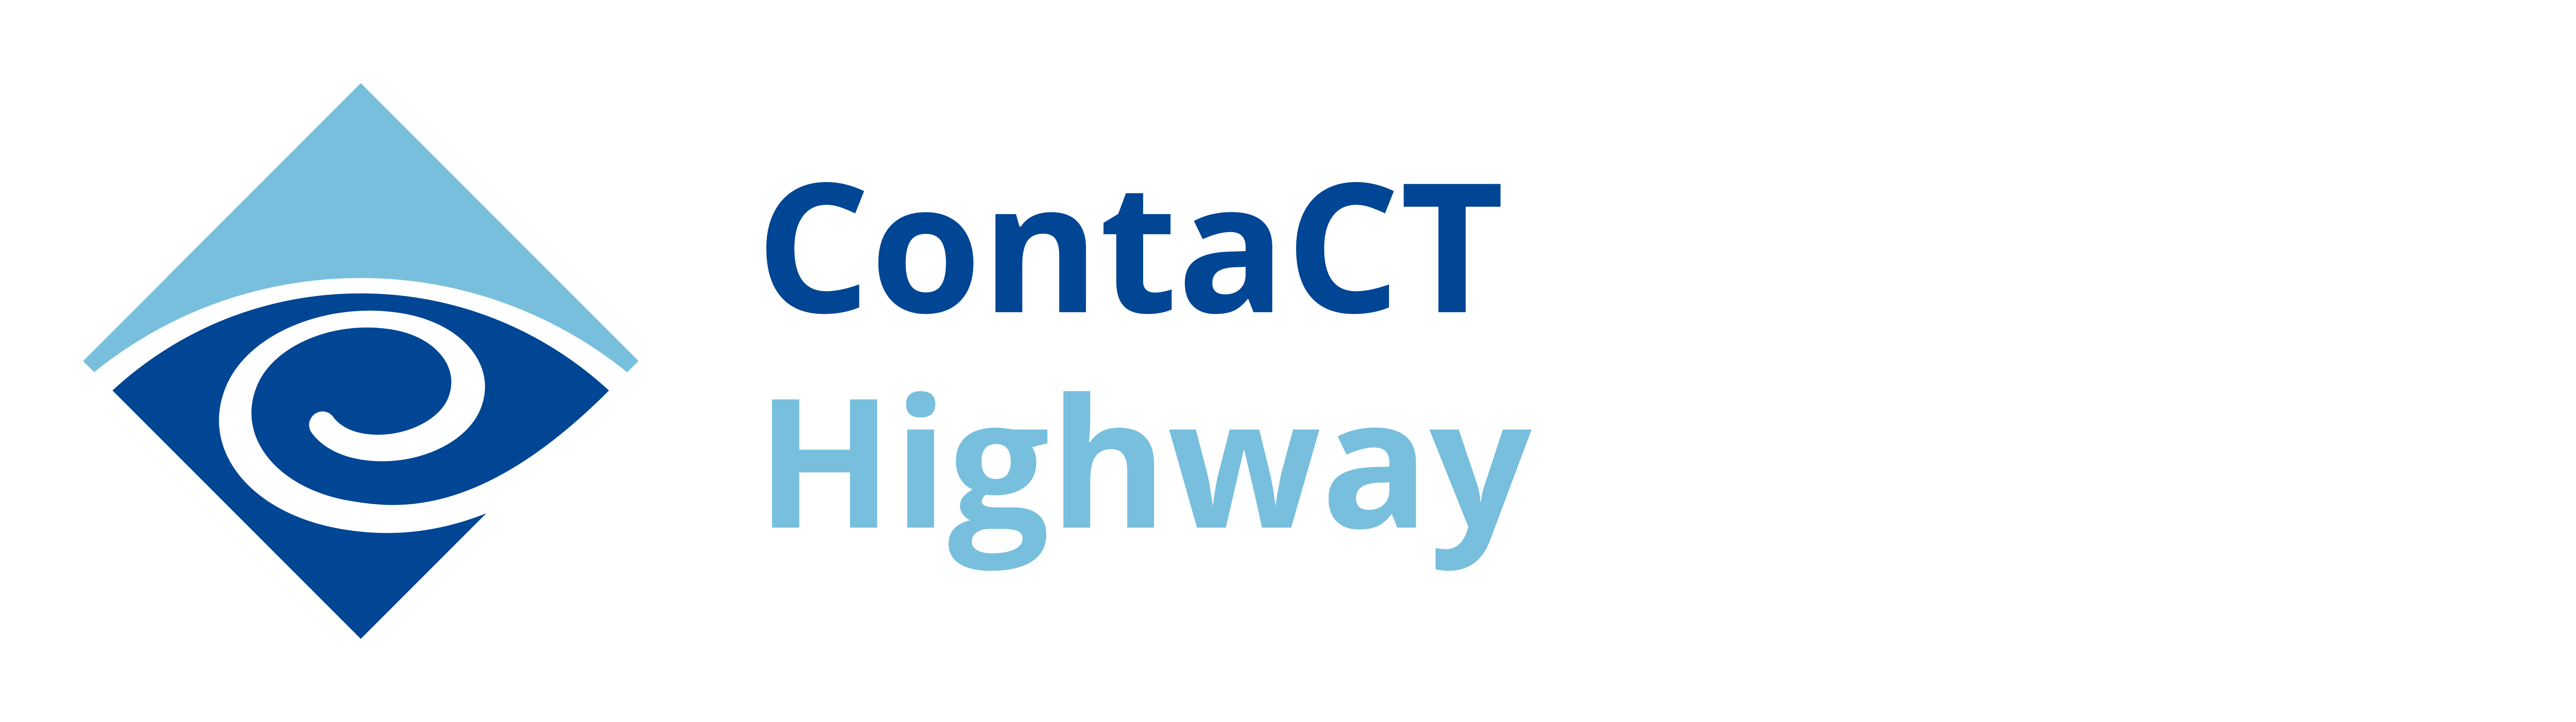 Prodotti ContaCT Highway